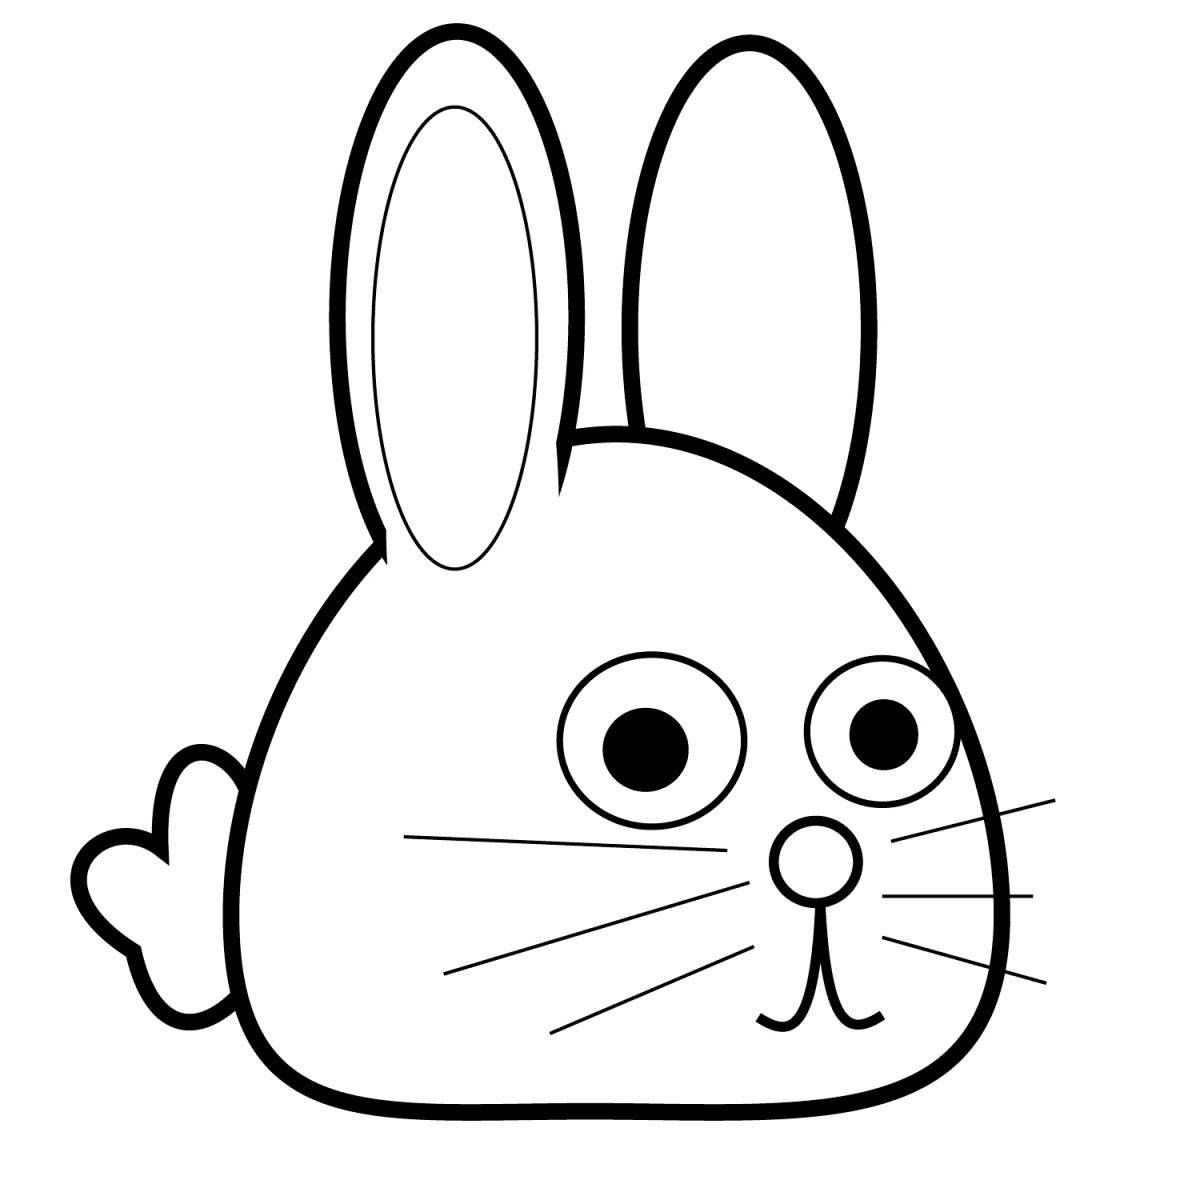 Coloring page adorable cute rabbit